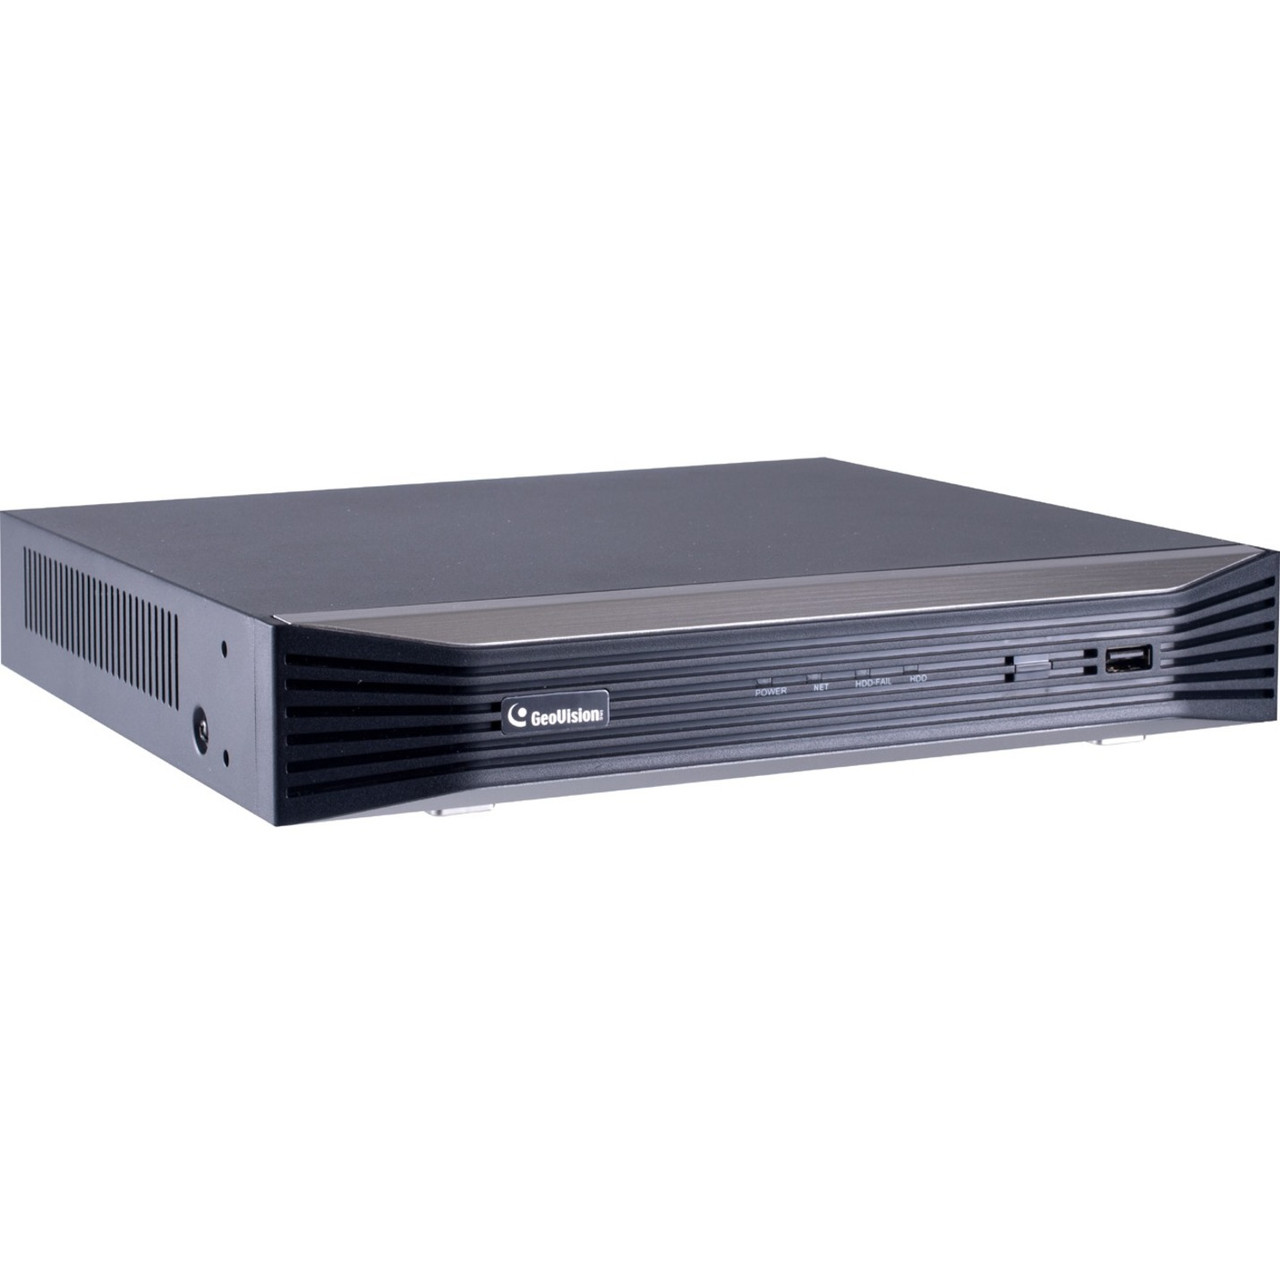 GeoVision GV-SNVR Network Video Recorder - 2 TB HDD - GV-SNVR0812 W/ 2TB